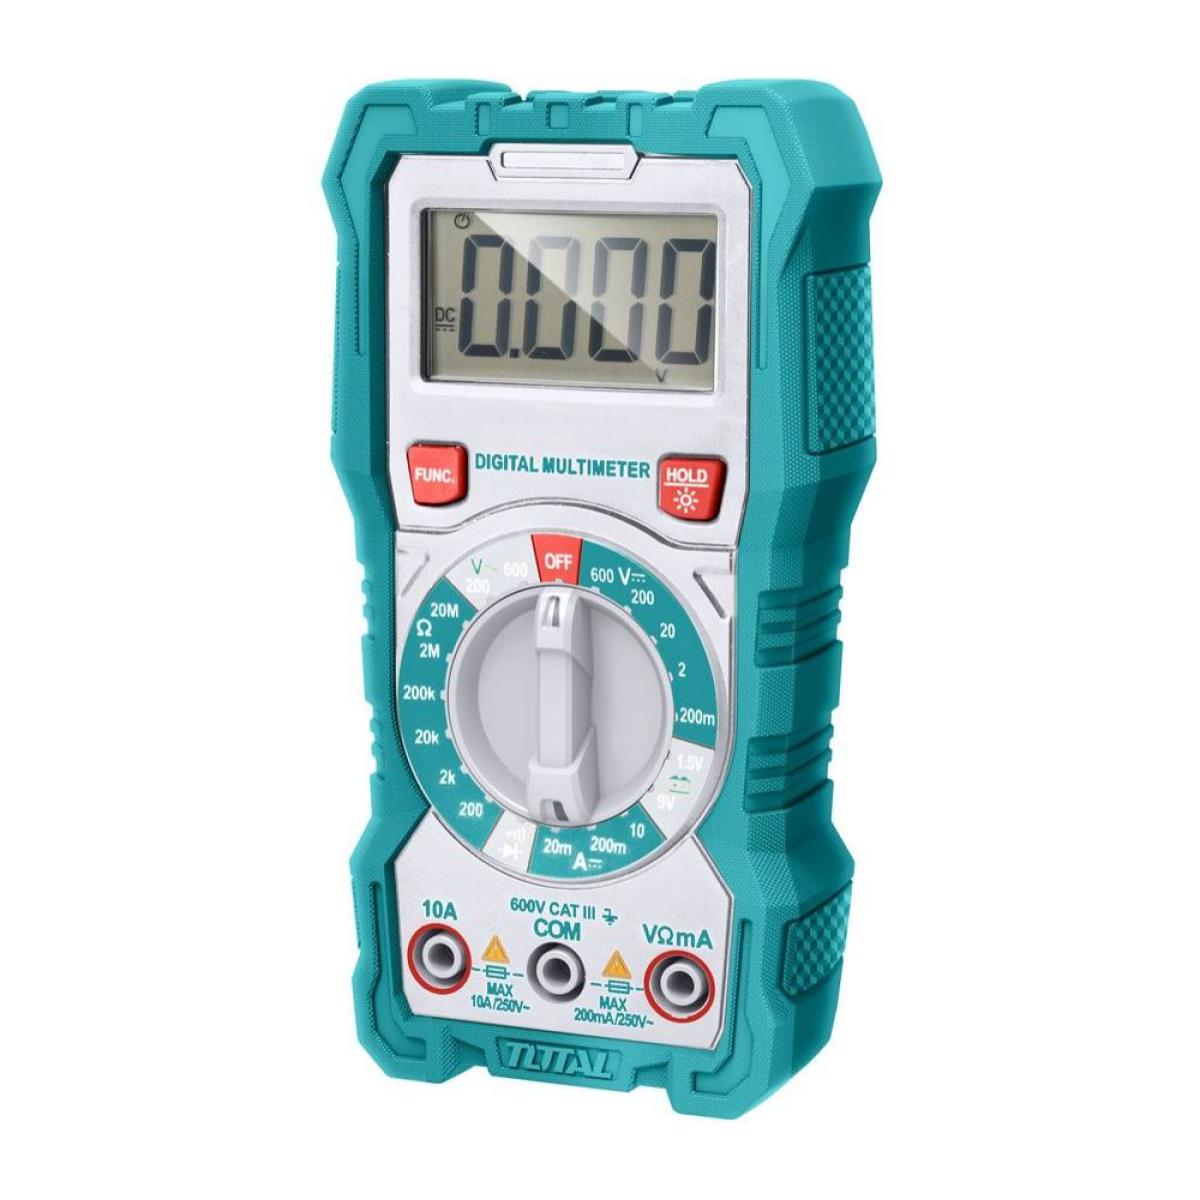 Tester Multimetro Digitale Pocket - 1999 counts